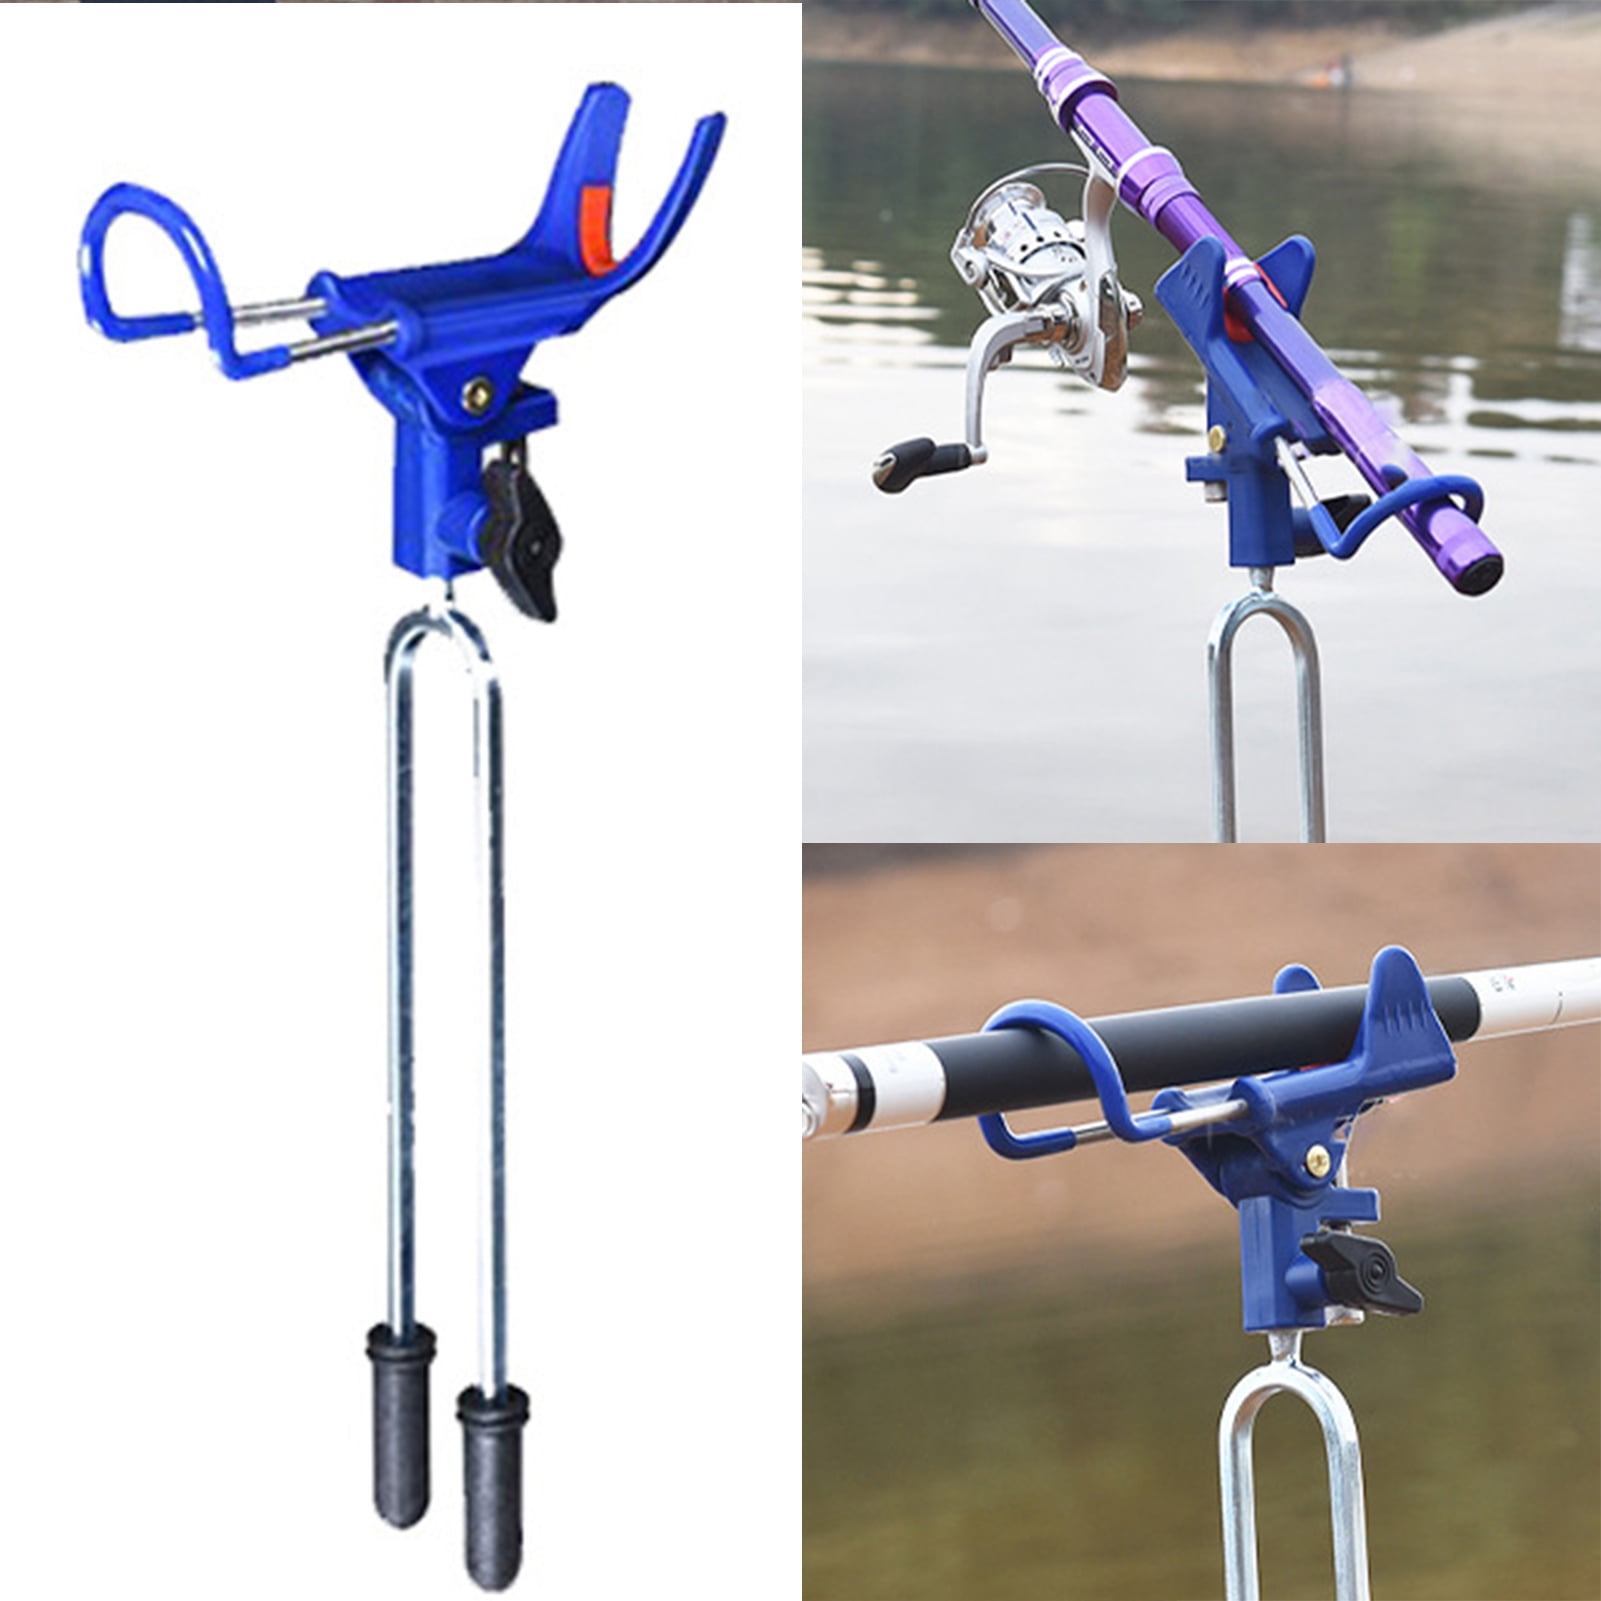 Thxoum 2 Pack Fishing Rod Holder Stands,Fishing Pole Holder for Bank Fishing,Fish Pole Rack Ground,Reinforced Nylon,Blue 